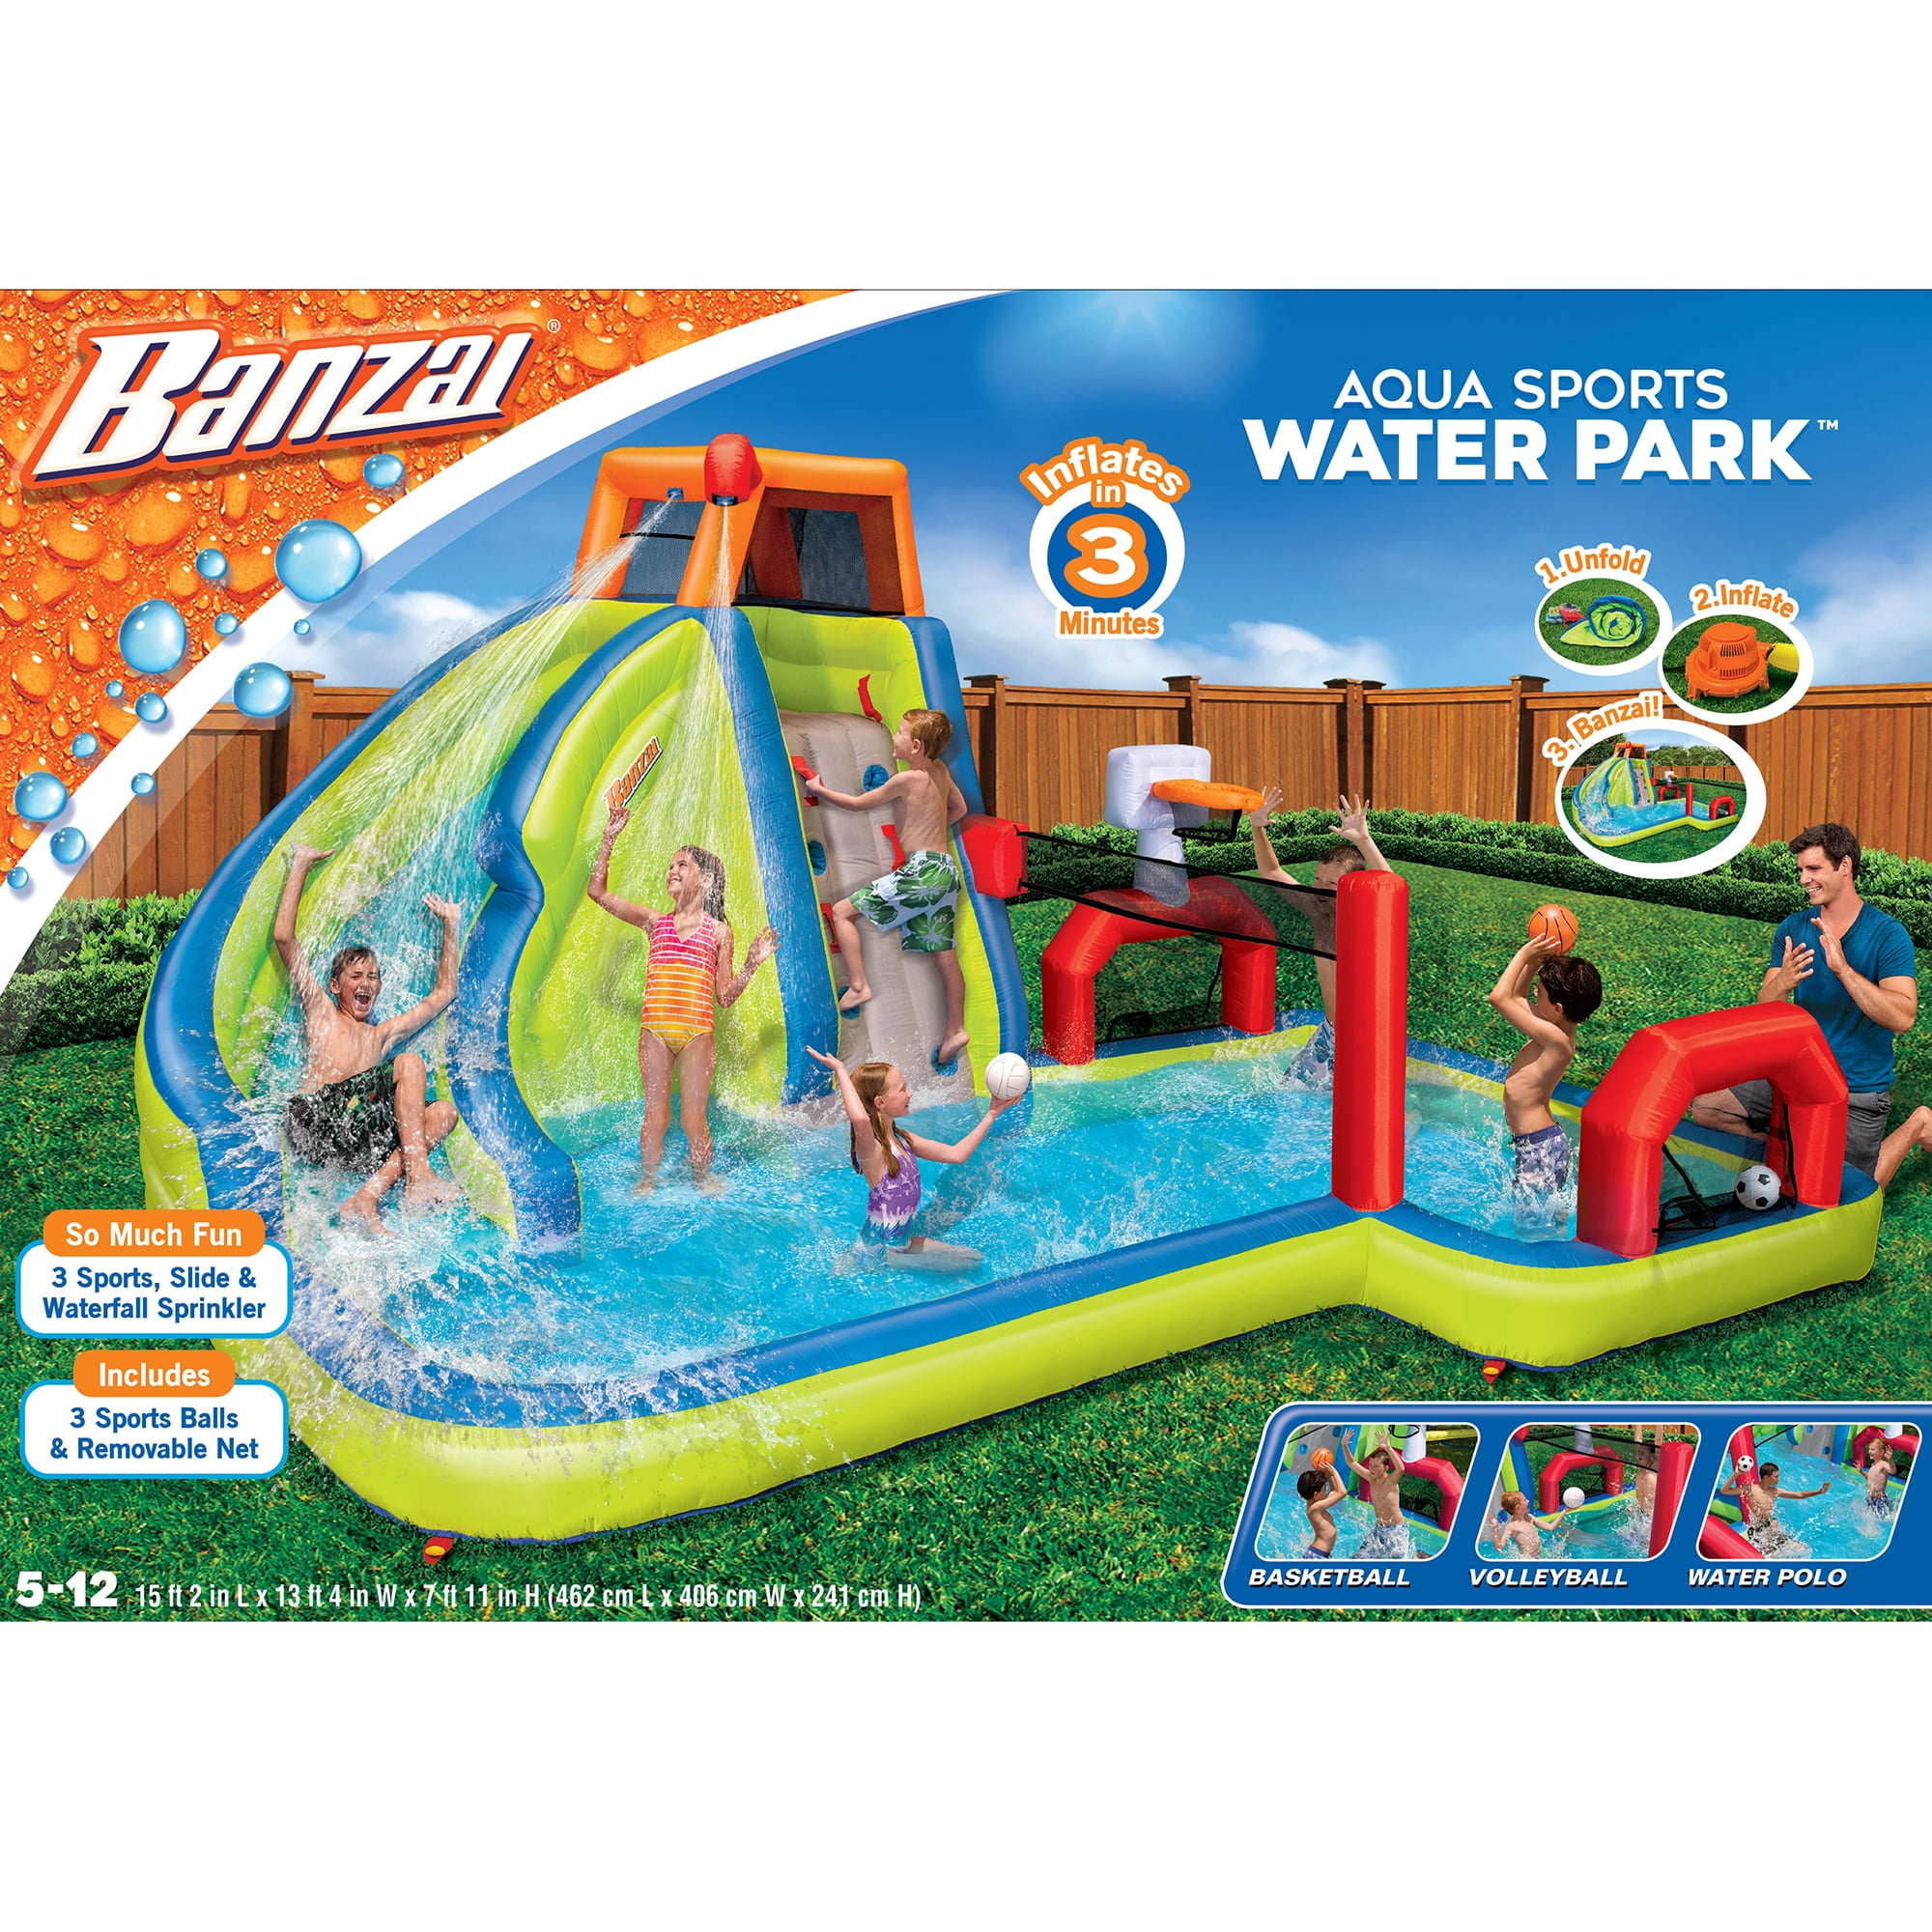 Banzai Aqua Blast Obstacle Course Water Slide for sale online 